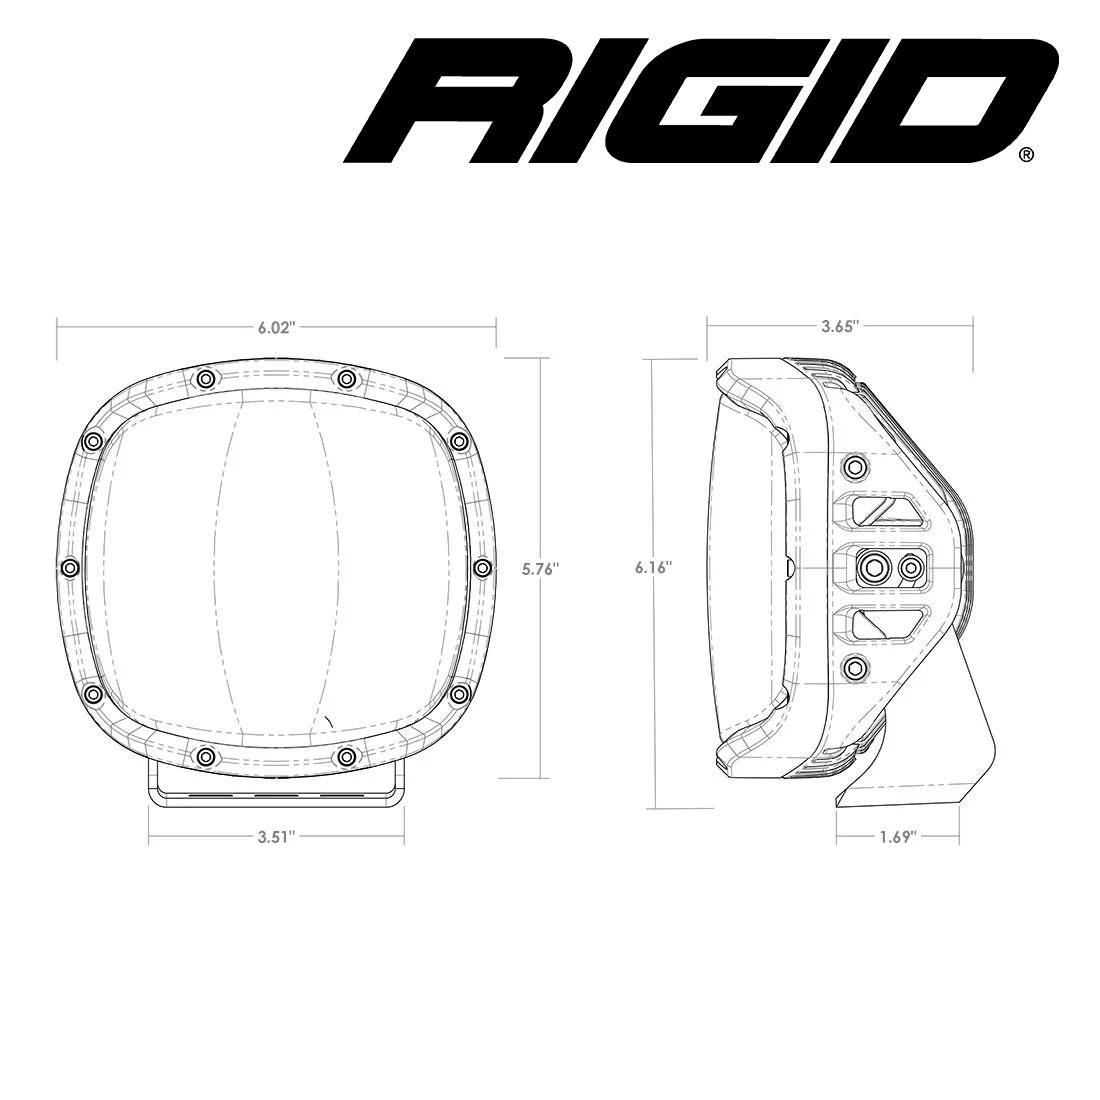 Rigid Adapt XP Extreme Powersports LED Lights - Pair Lighting Rigid Industries design